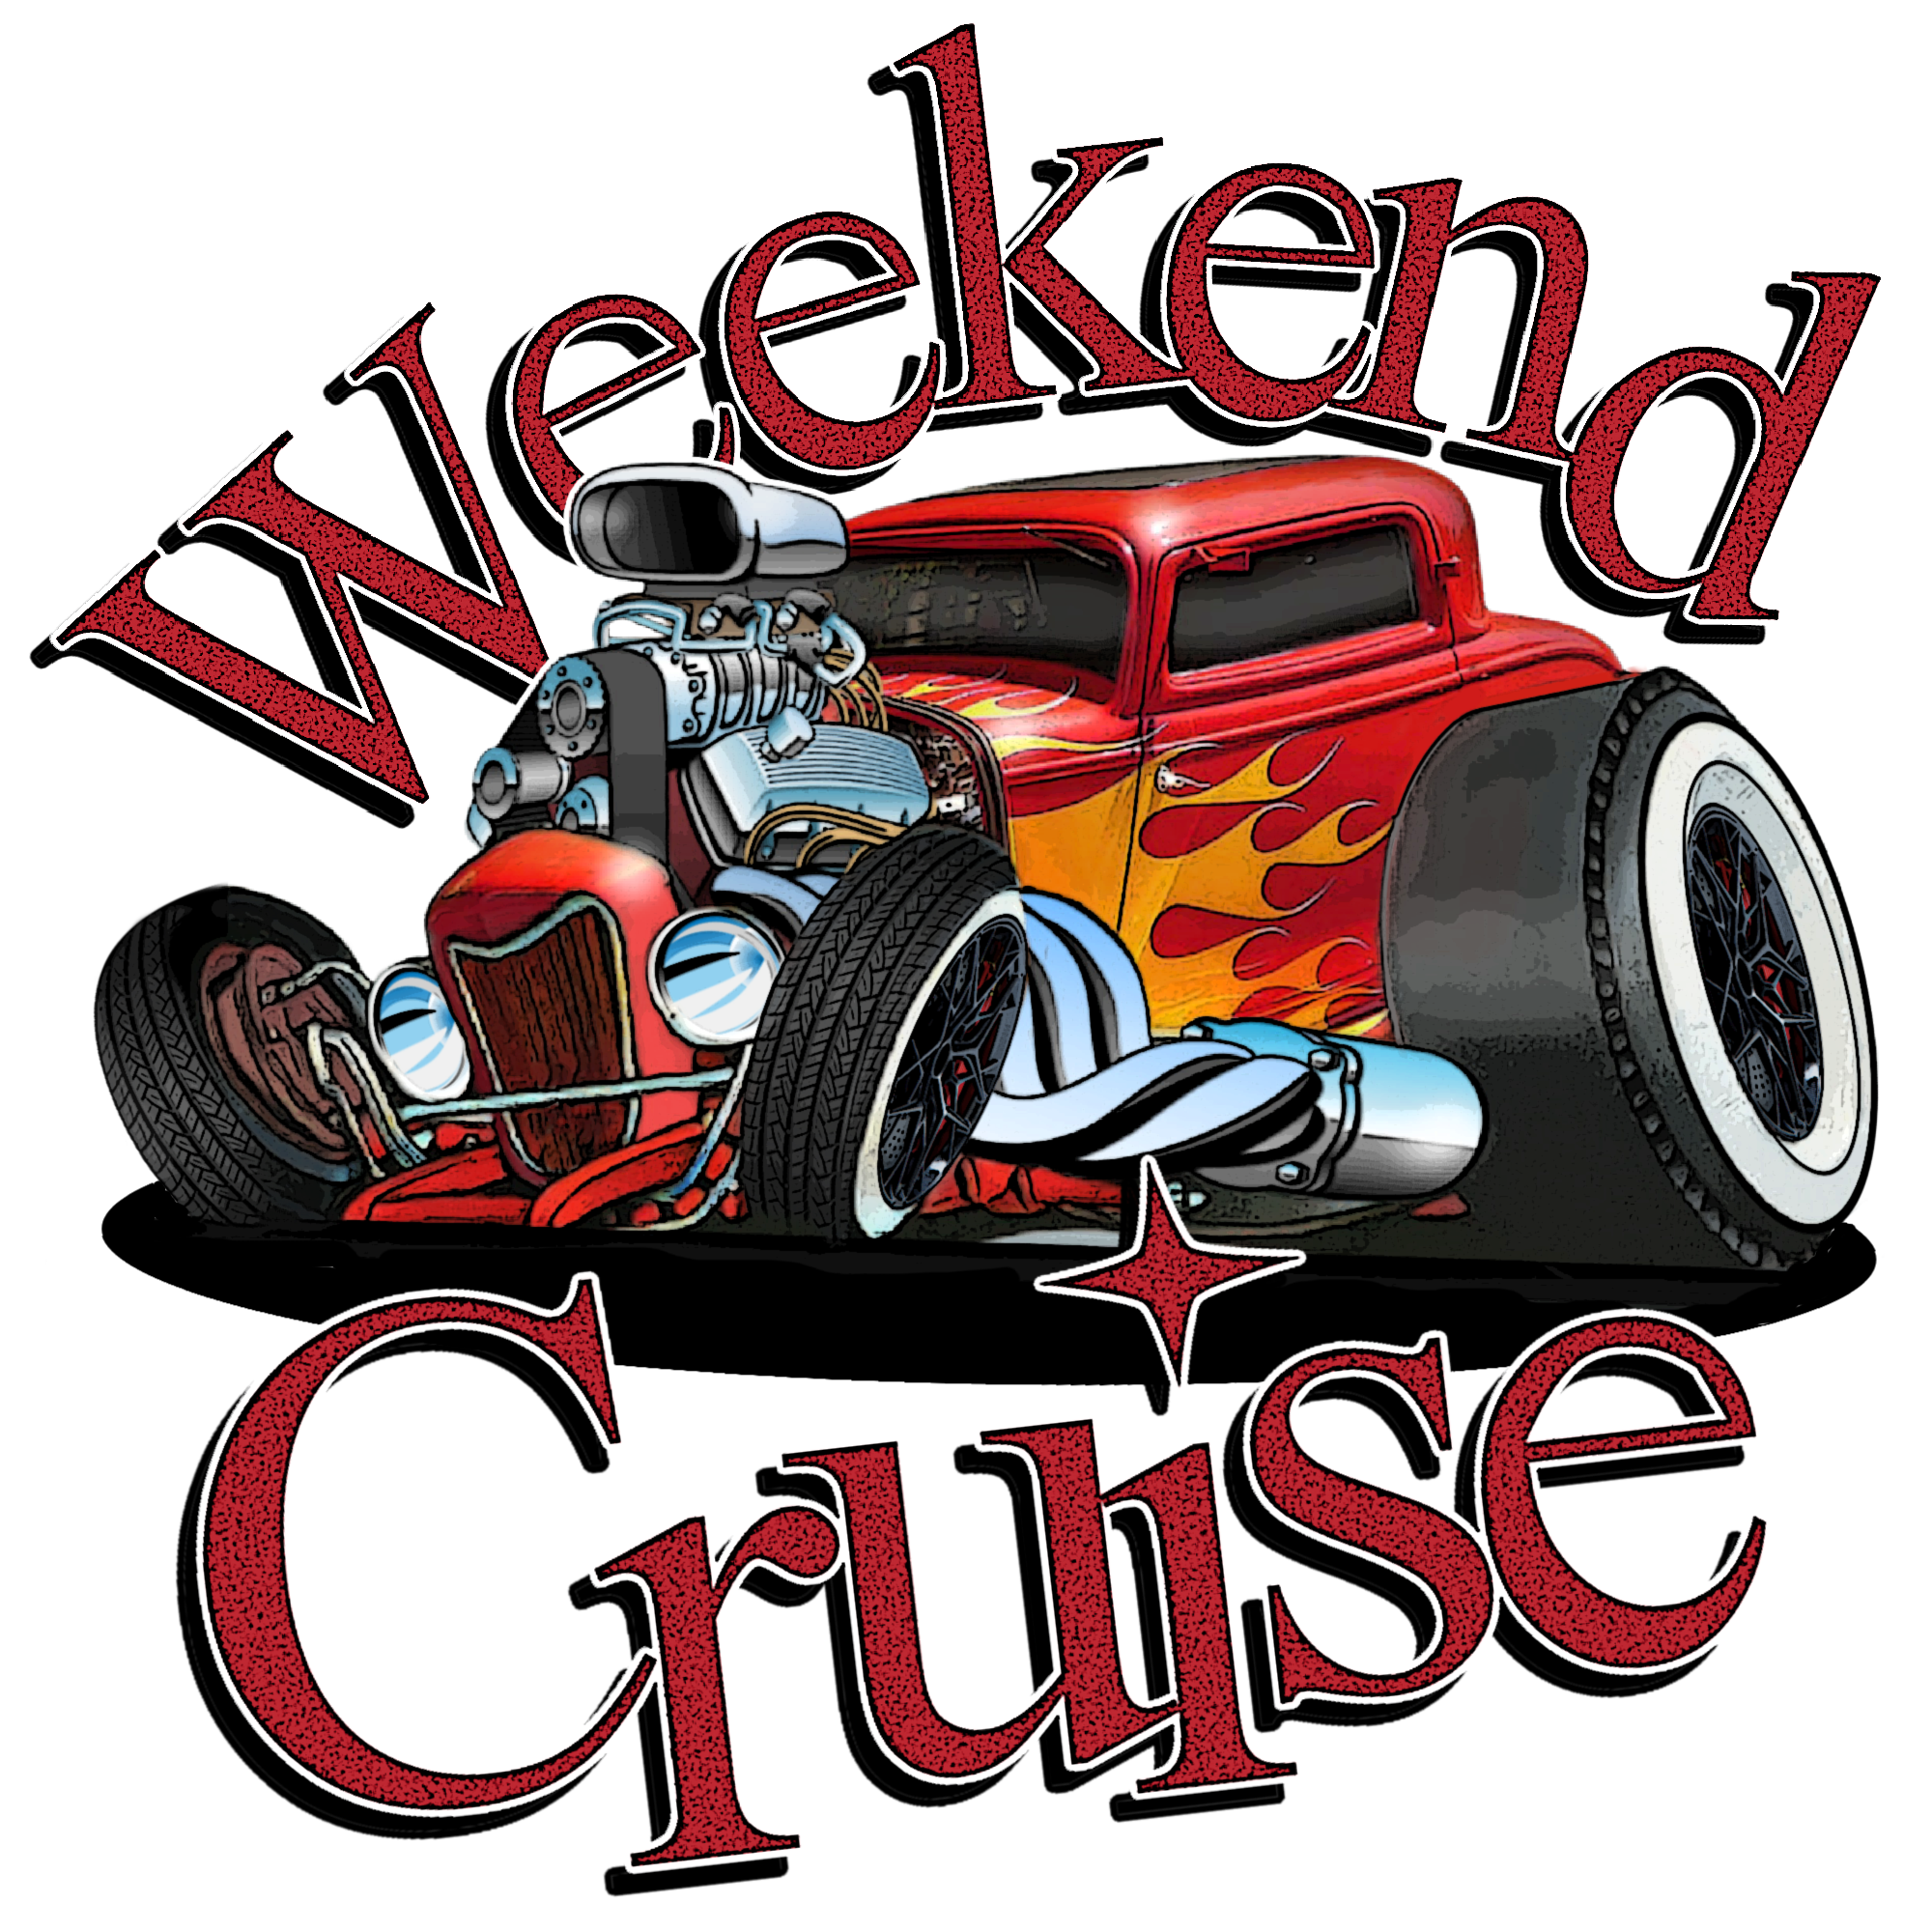 Weekend Cruise - Image